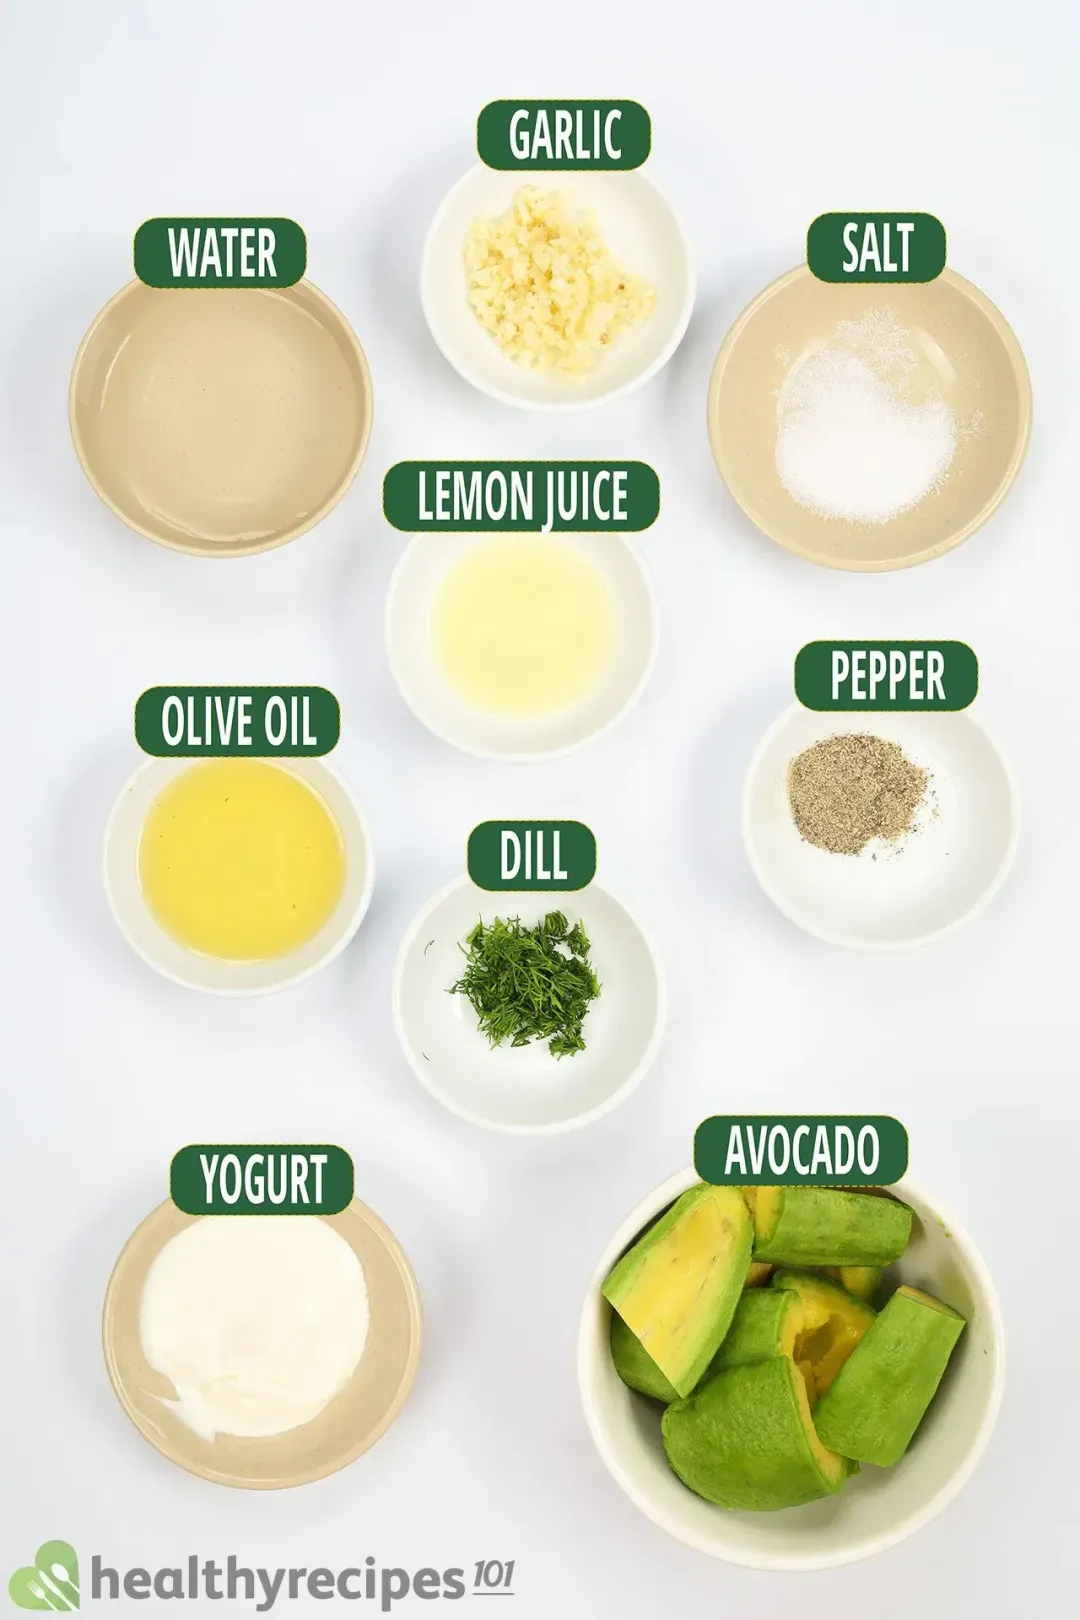 Ingredients for Avocado Dressing